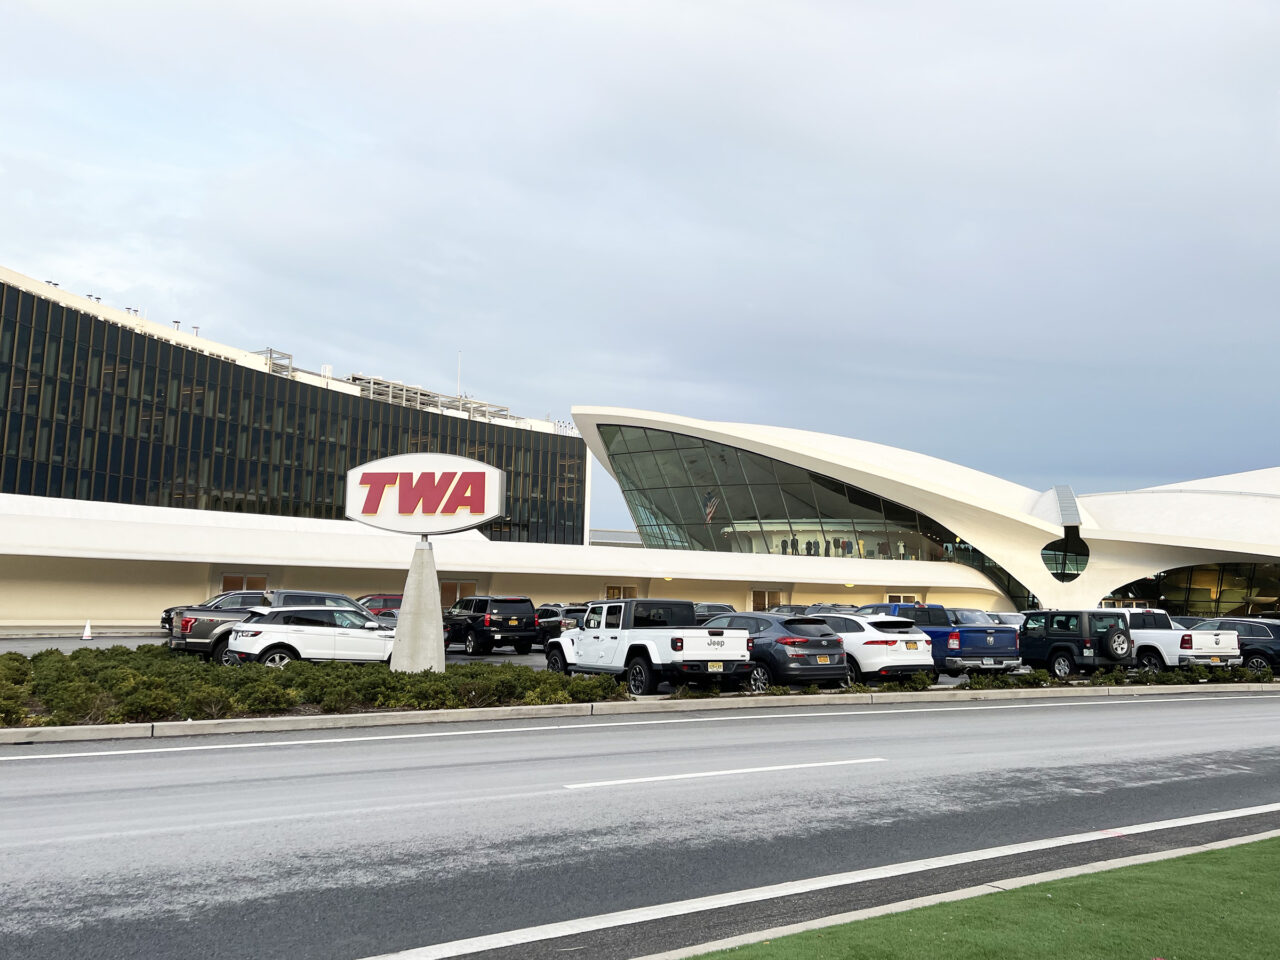 TWA Hotel Exterior, JFK Airport Terminal 5